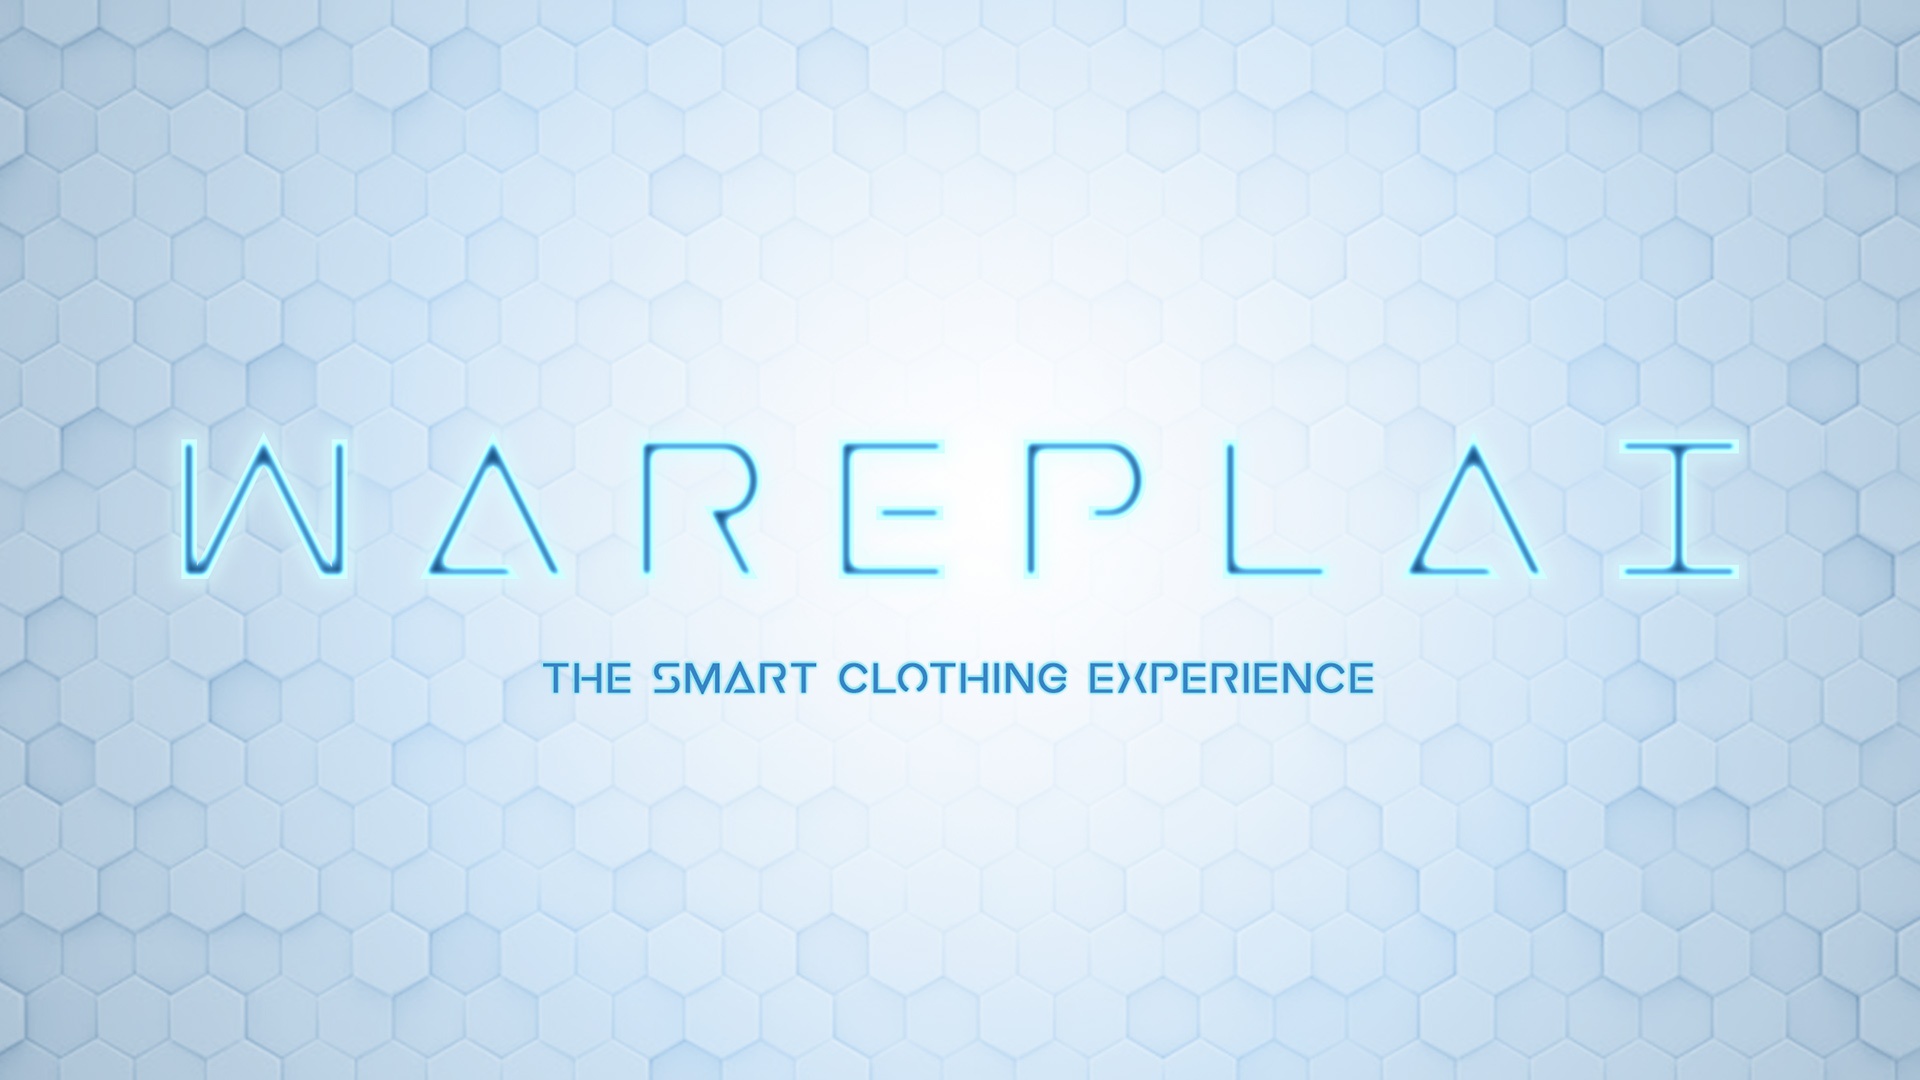 Wareplai the smart clothing experience logo